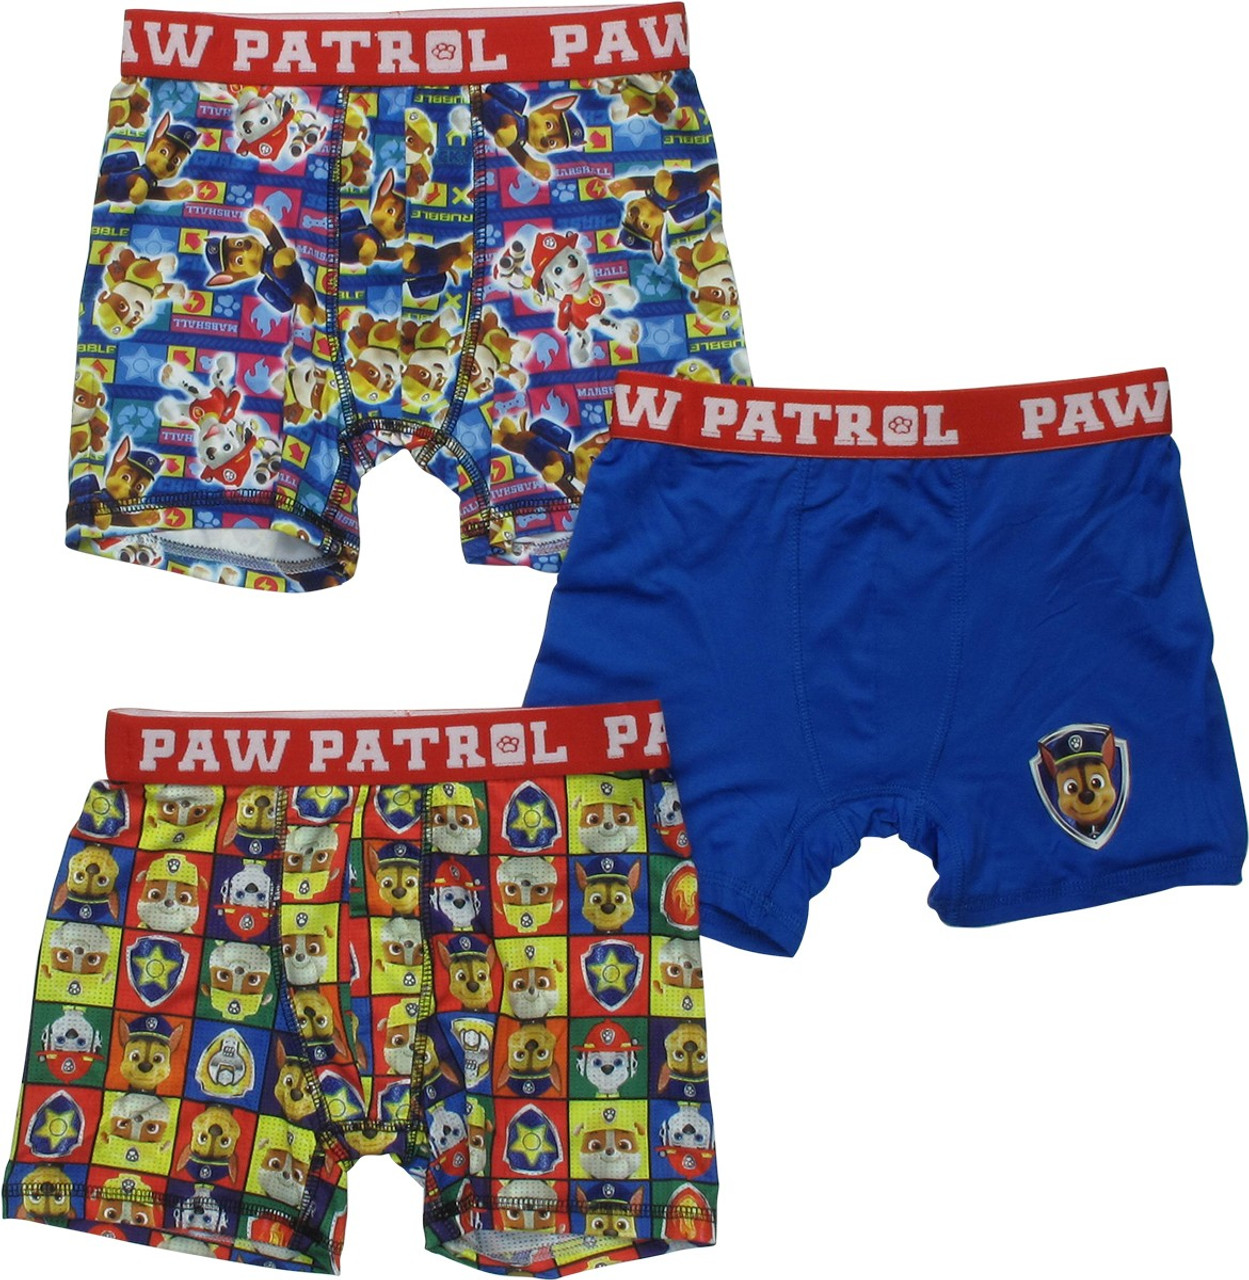  Paw Patrol Underwear